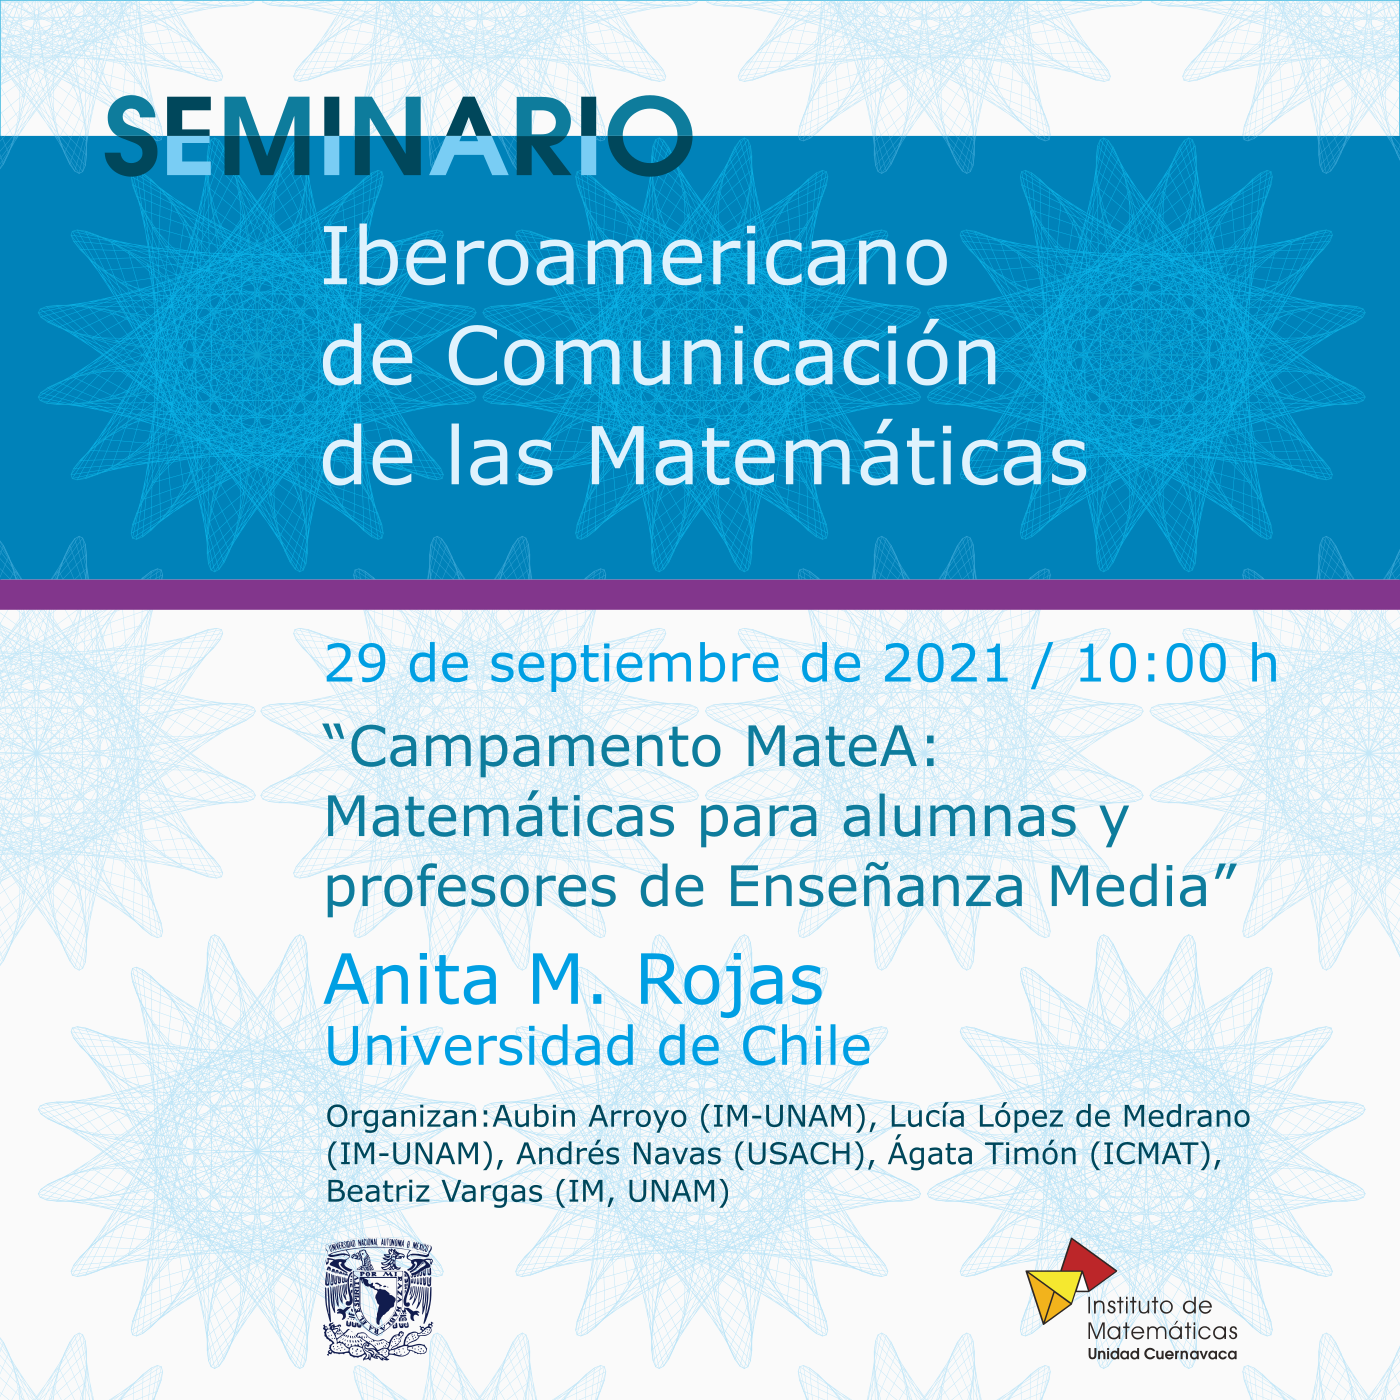 Seminario Iberoamericano de Comunicación de las Matemáticas 29 de septiembre 2021